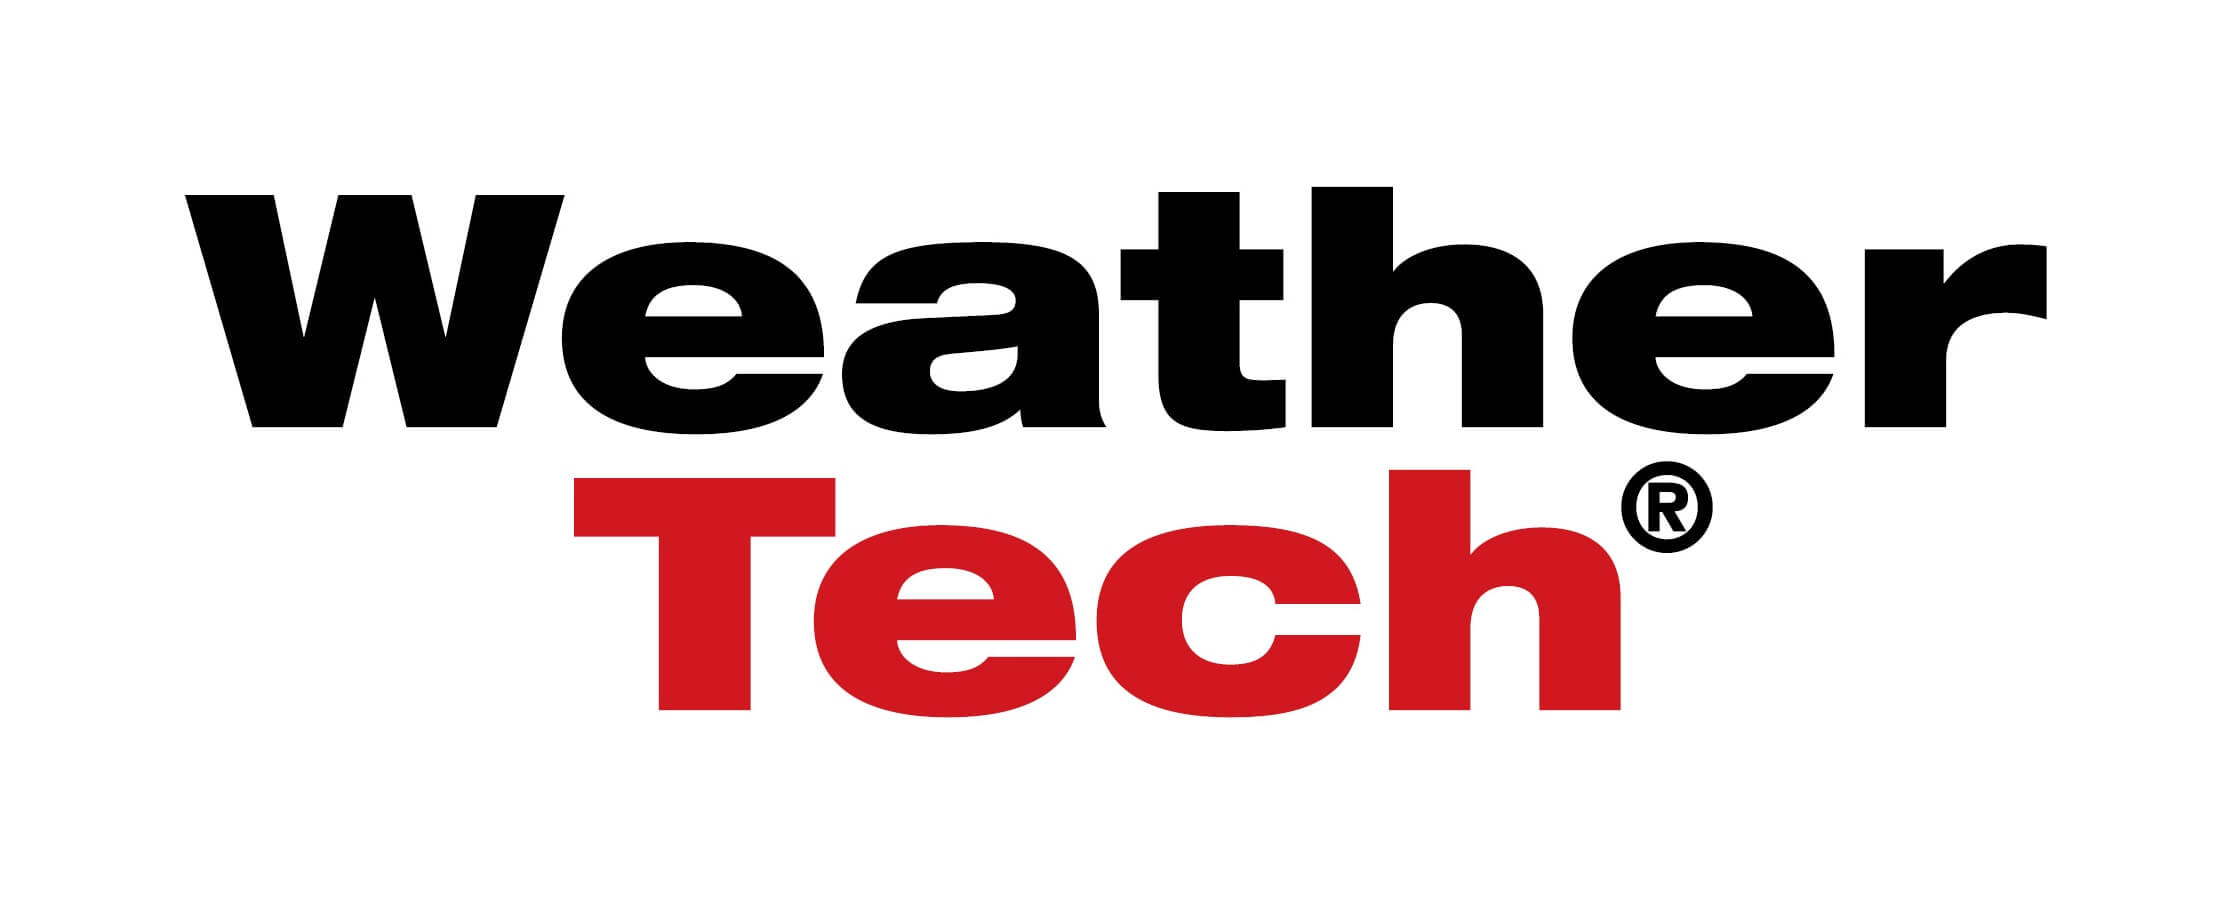 weathertech-logo.jpg